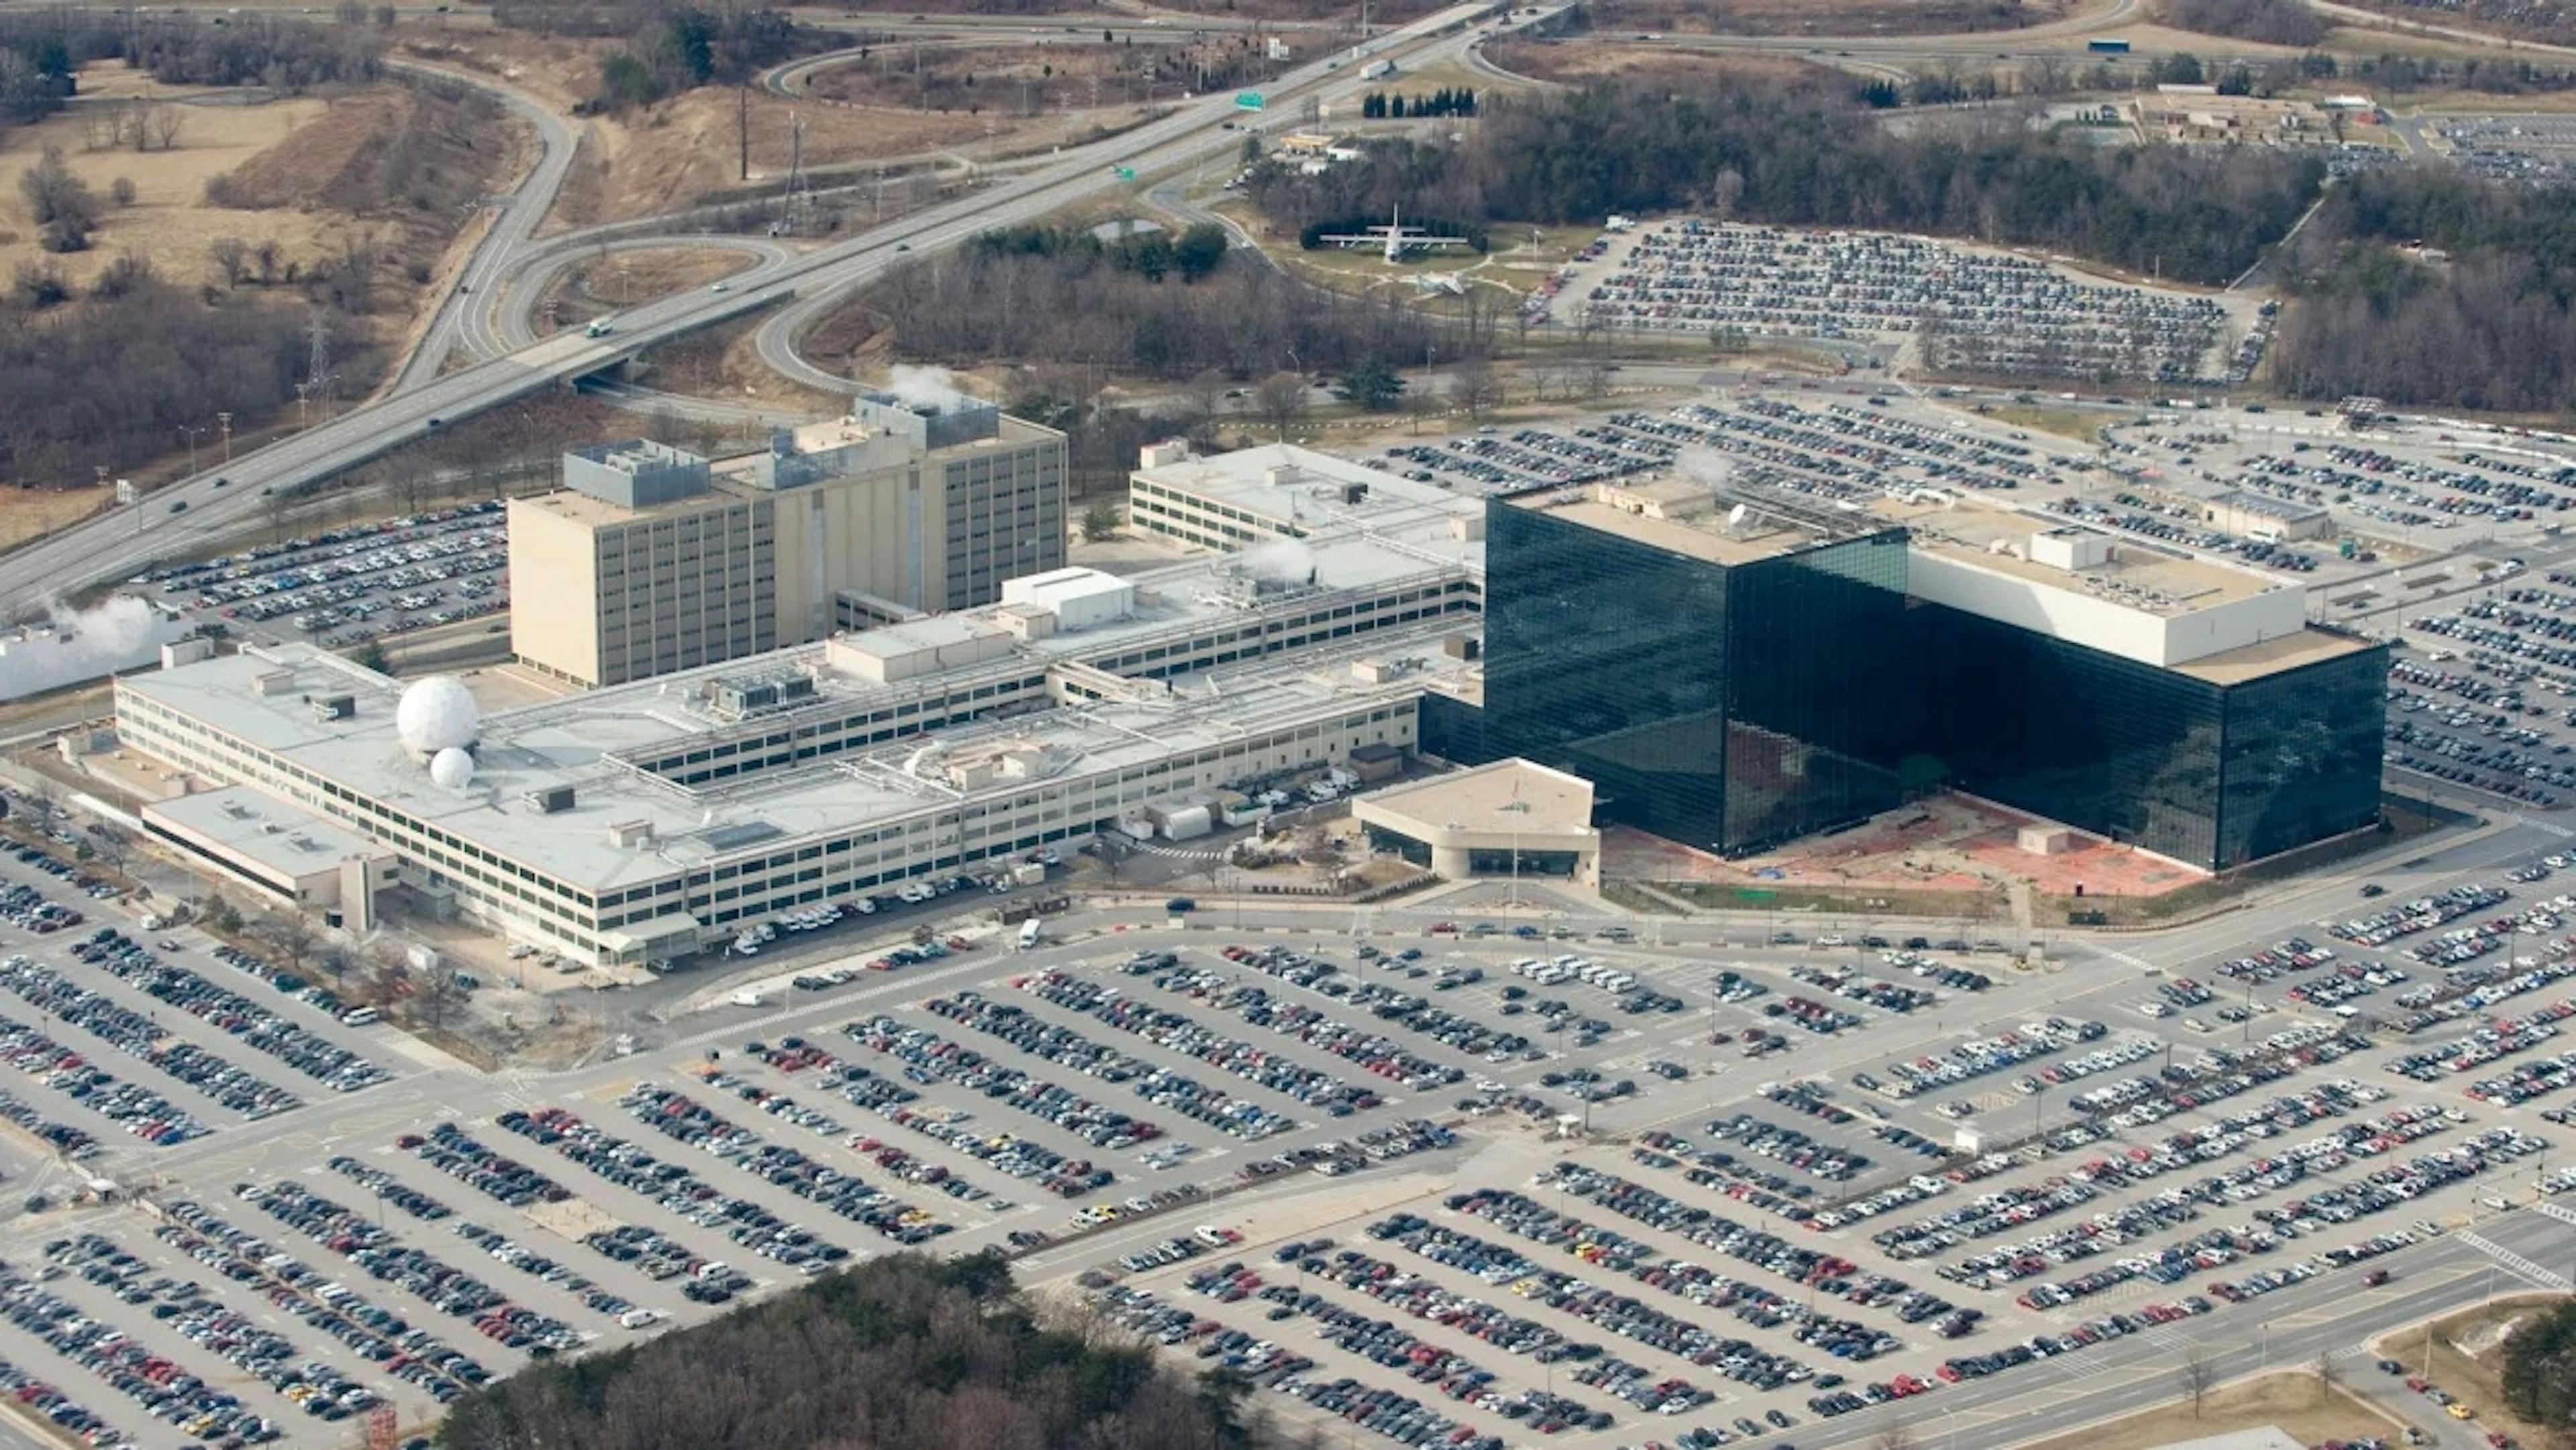 Das Hauptquartier der National Security Agency (NSA) in Fort Meade, Maryland, aus der Luft, 29. Januar 2010. Saul Loeb/AFP/Getty Images